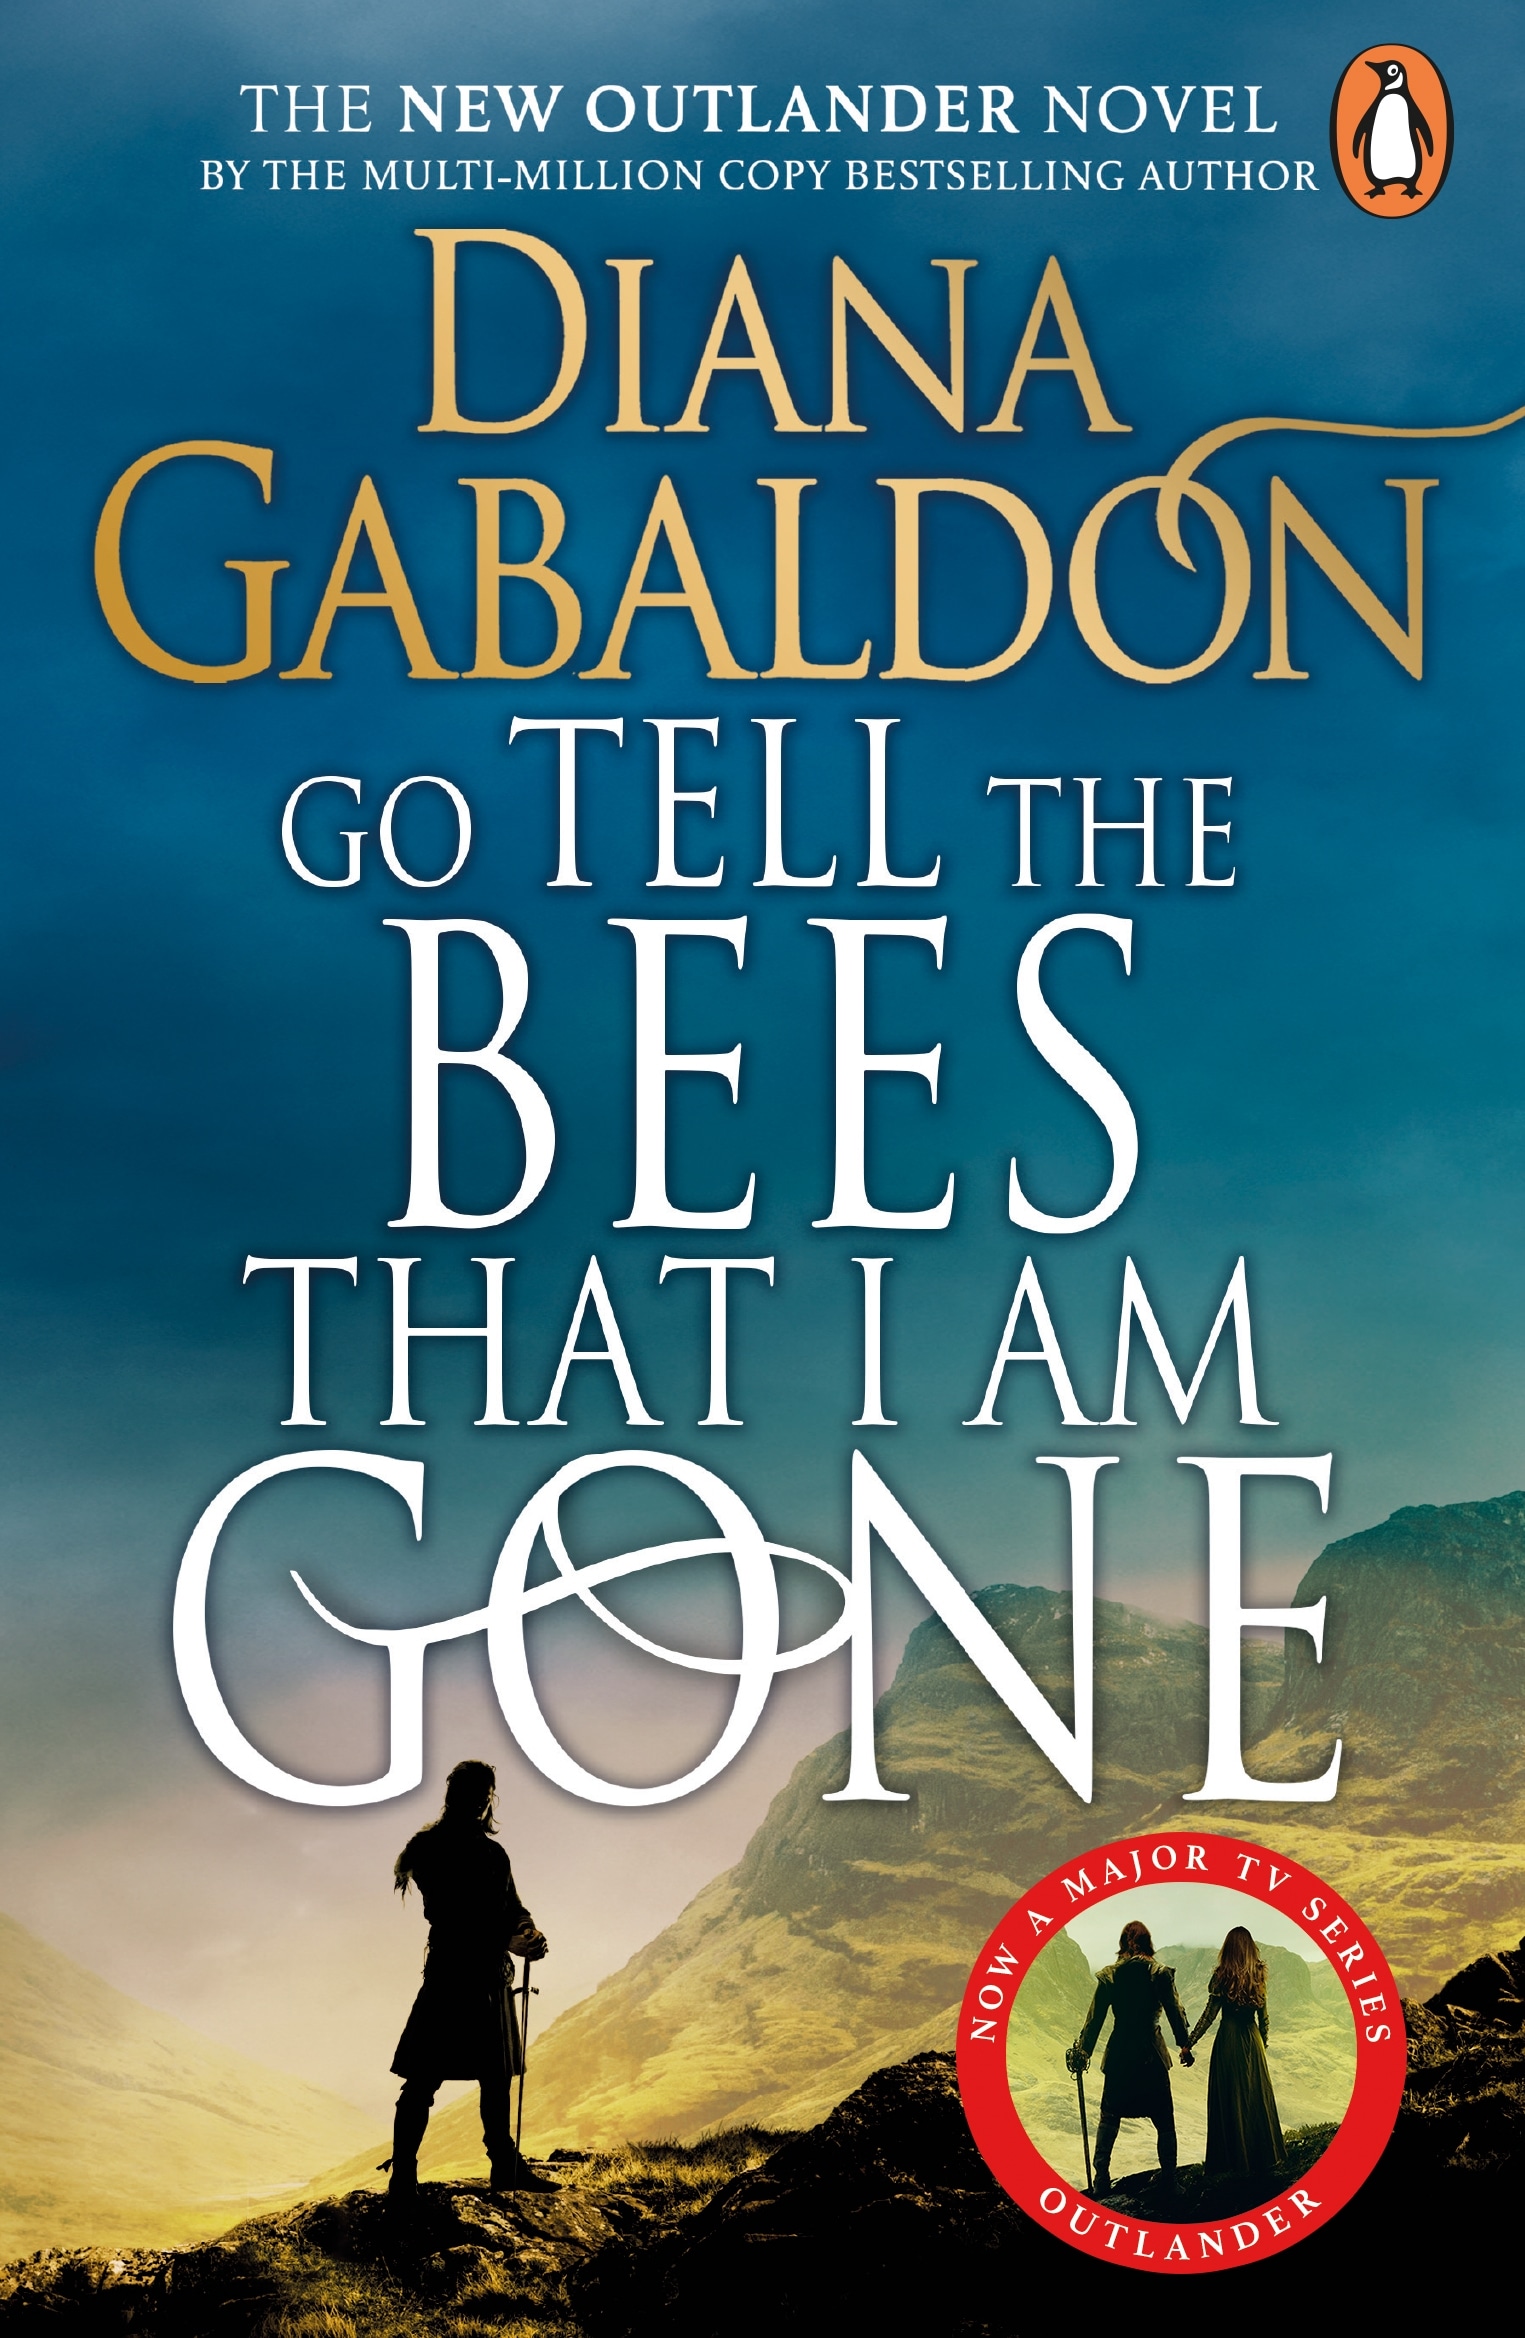 Book “Go Tell the Bees that I am Gone” by Diana Gabaldon — September 13, 2022